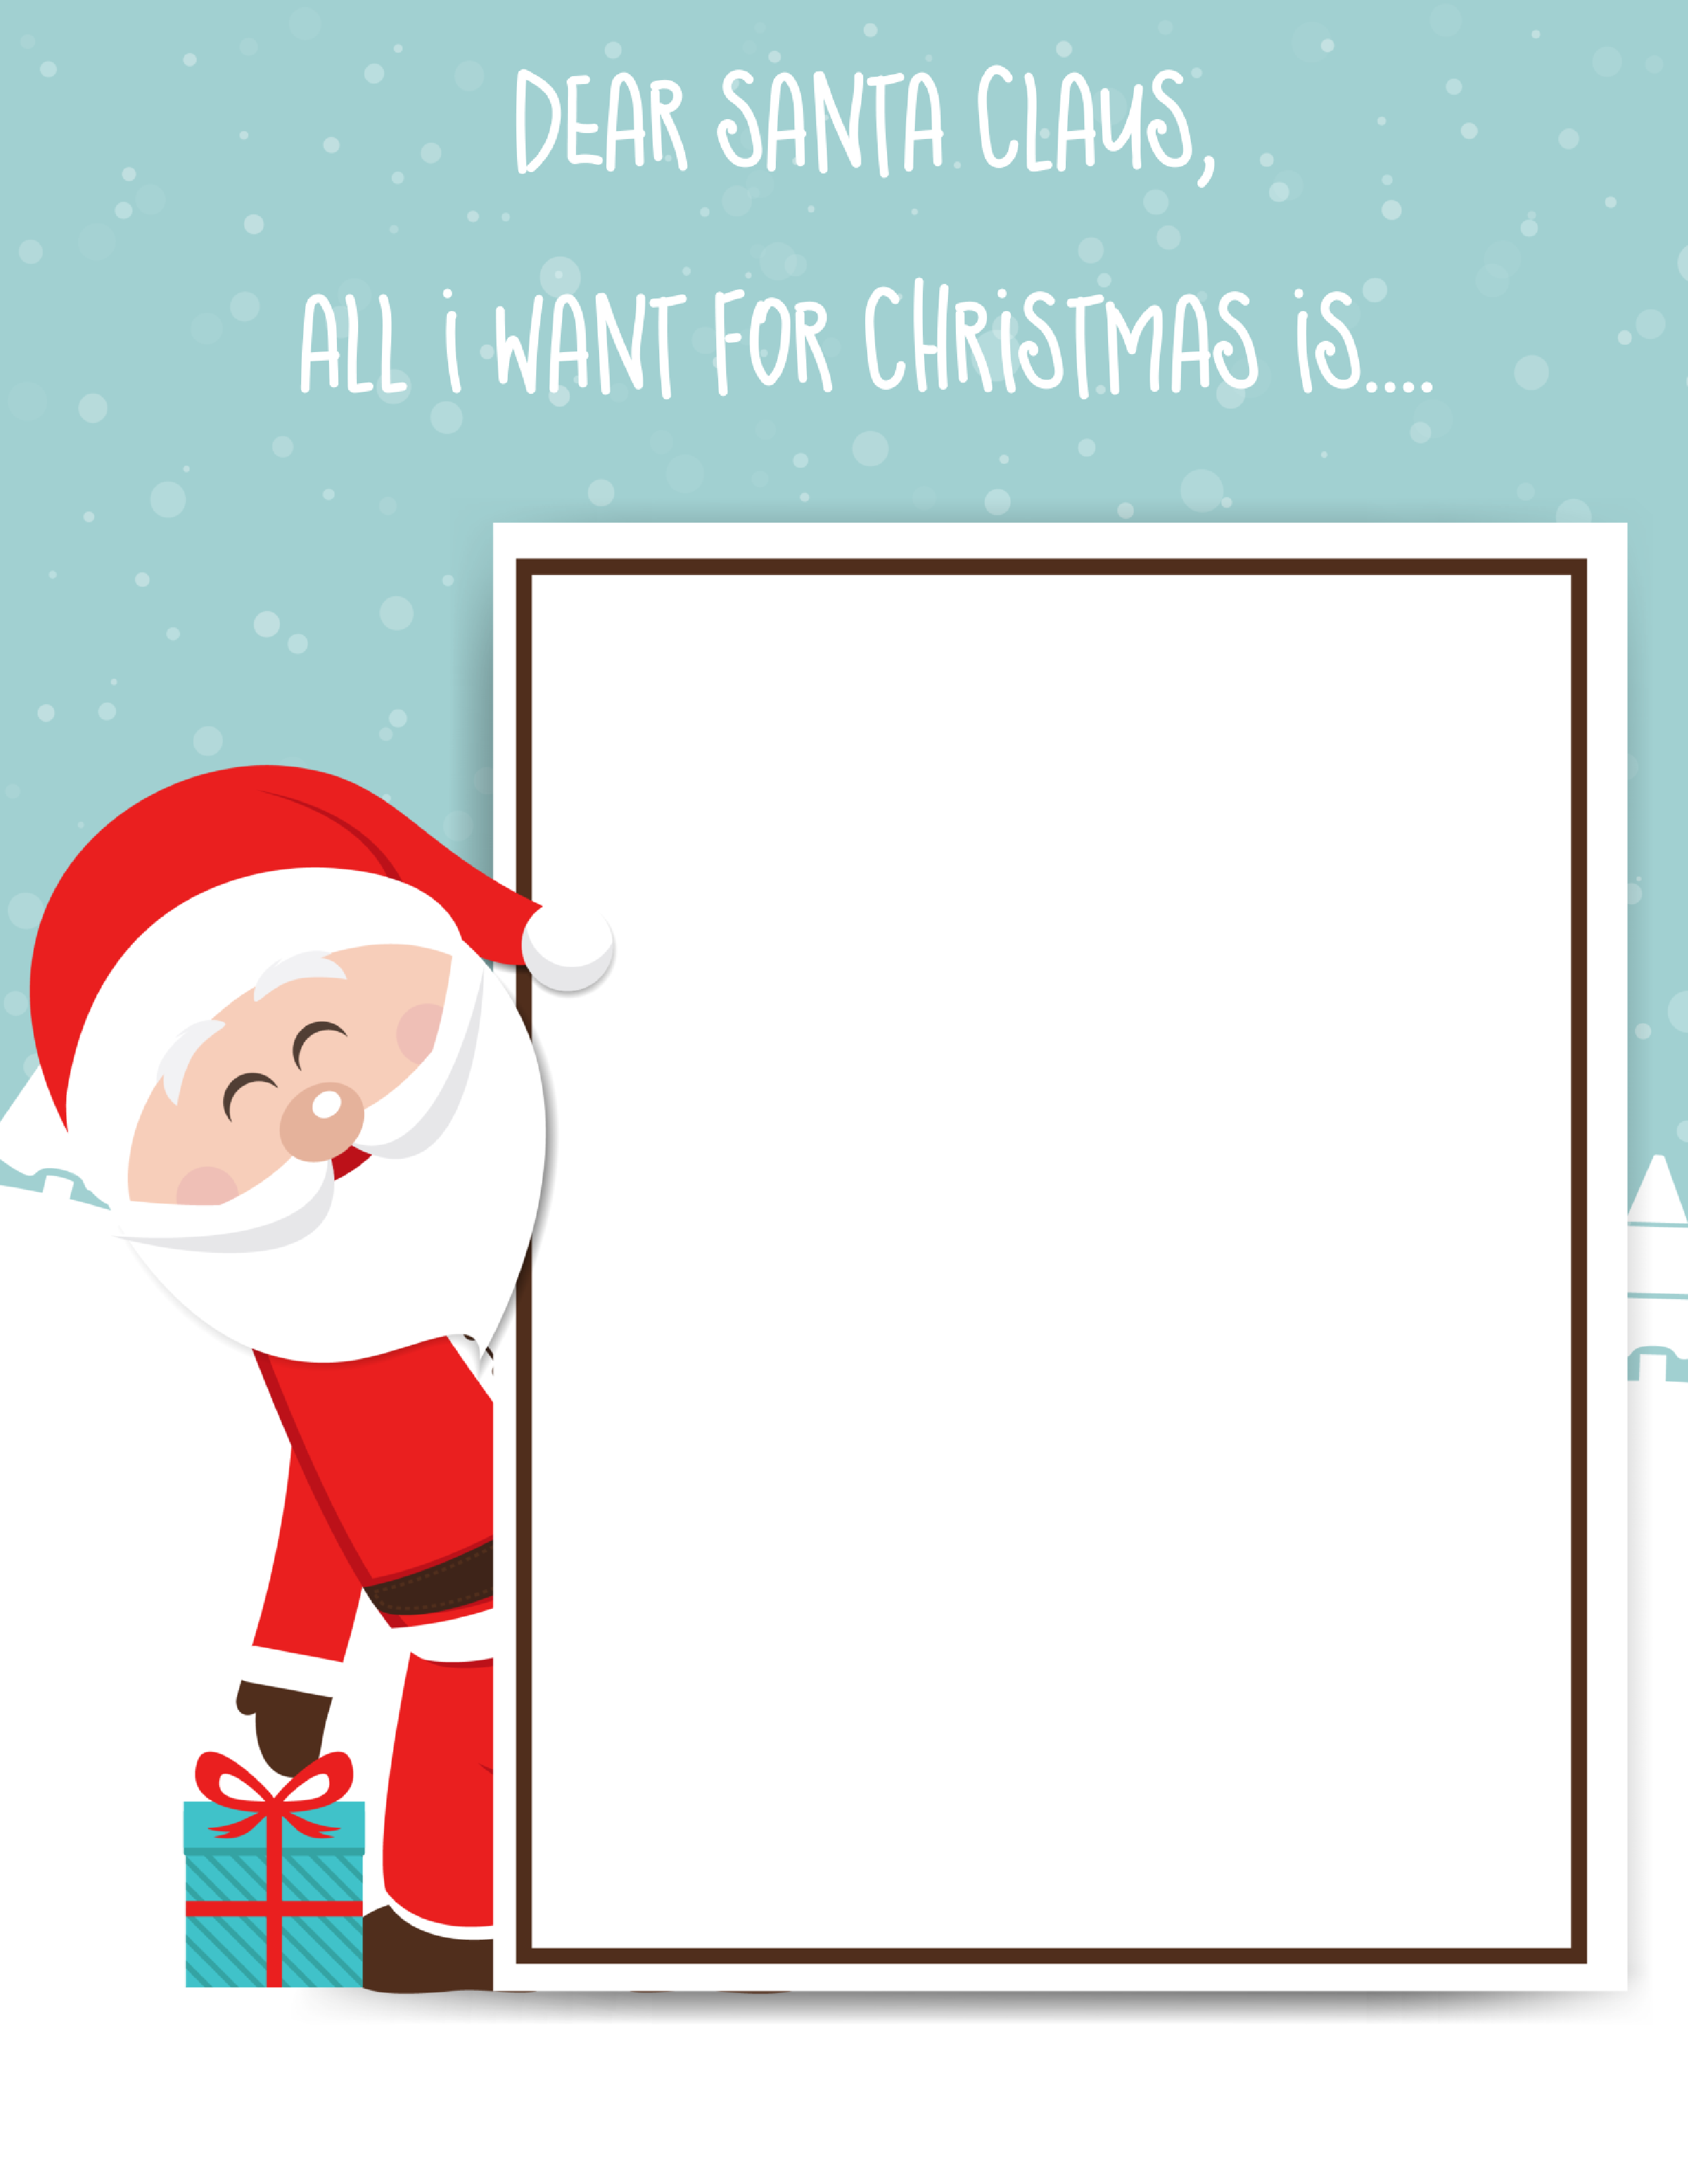 Santa Claus Letter: FREE PRINTABLE FOR KIDS Momdot com